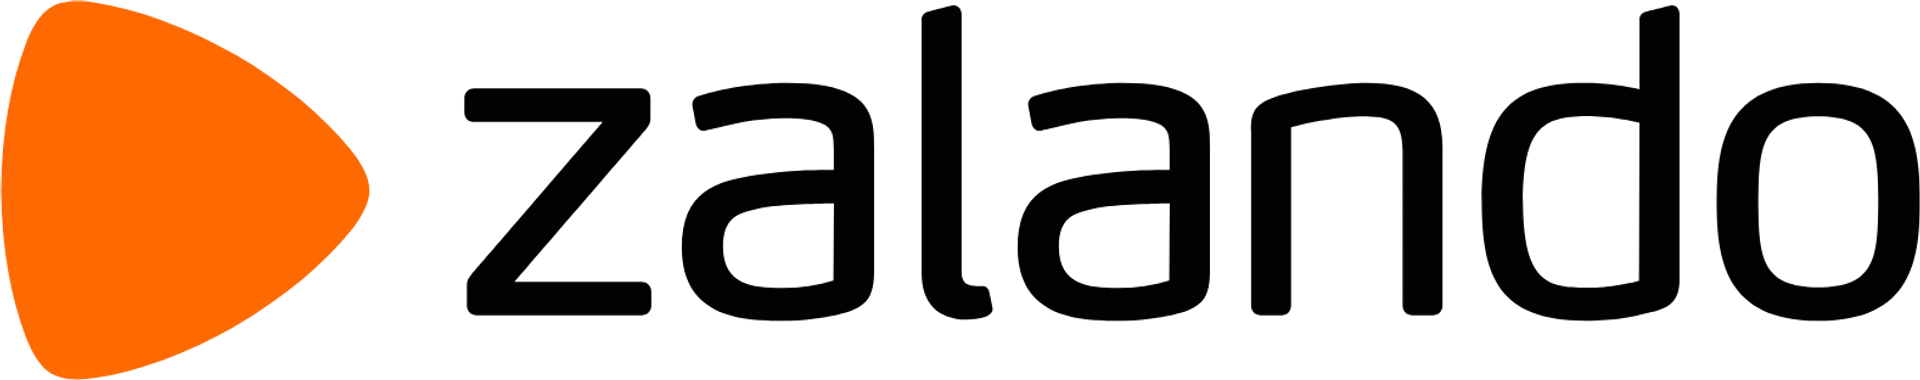 ZALANDO logo. Current catalogue